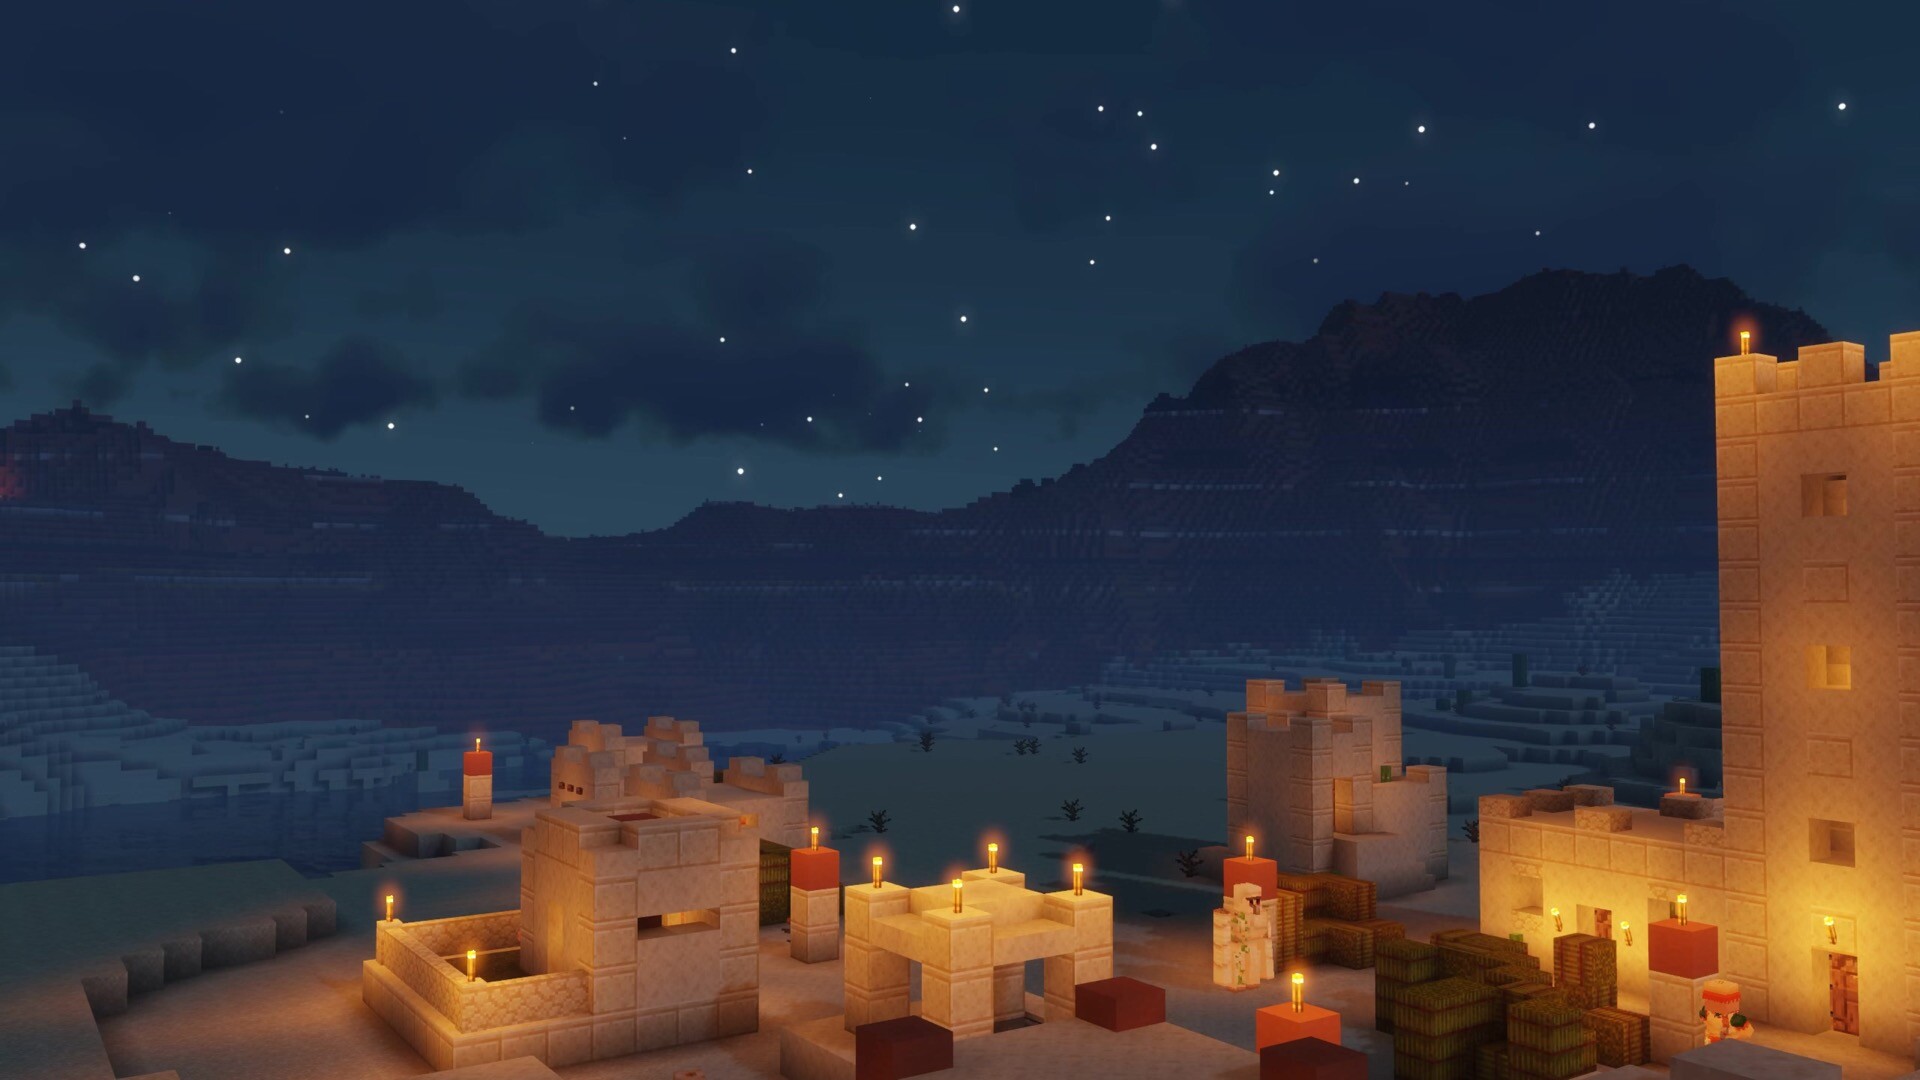 Minecraft Village Desert我的世界沙漠小镇动态壁纸